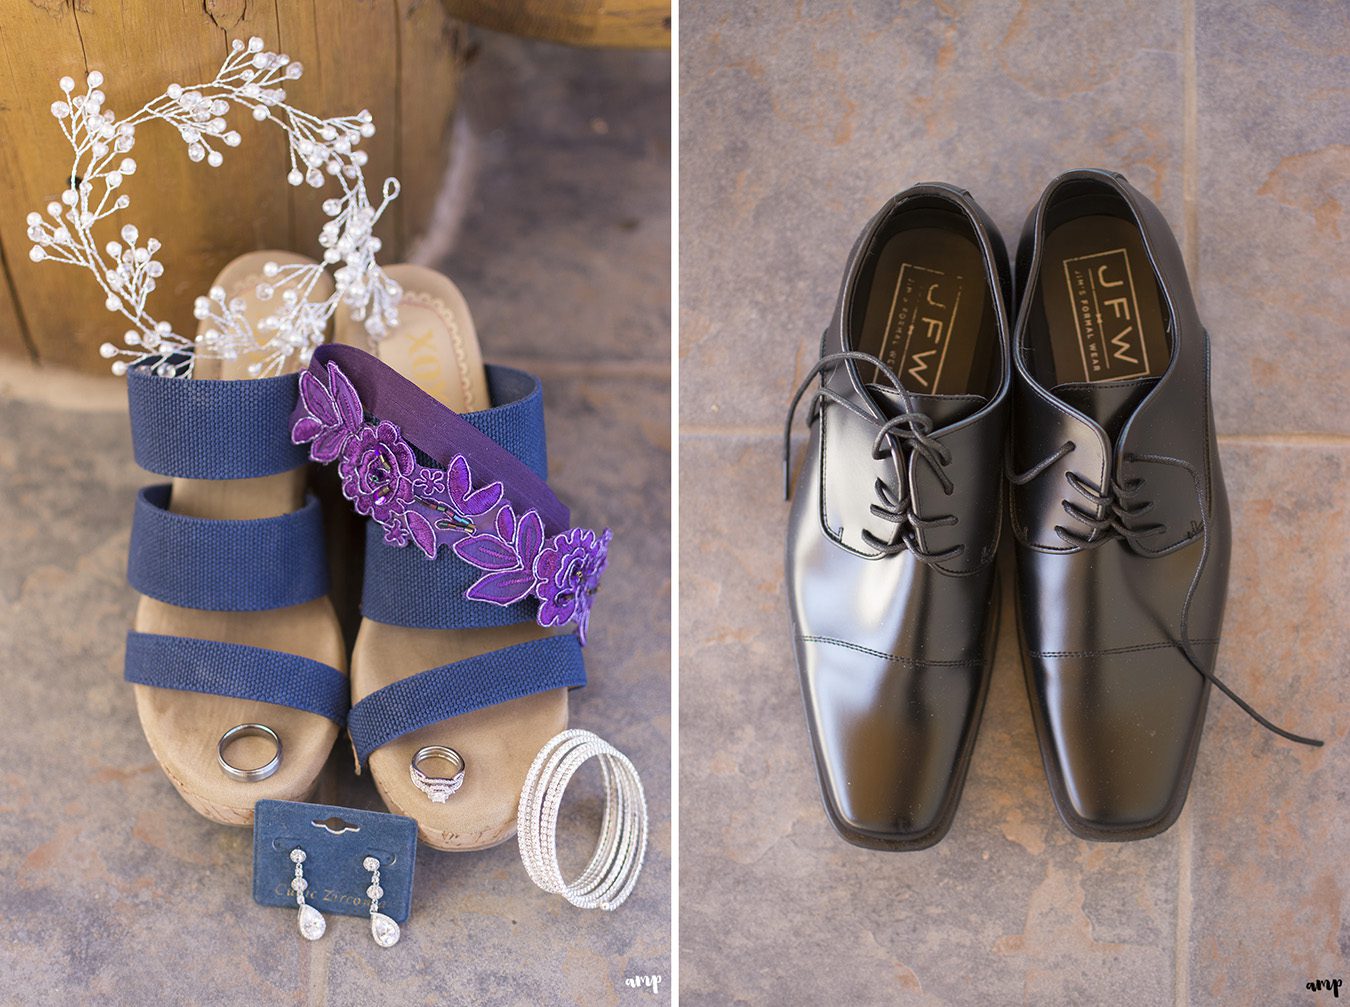 Wedding details for an eggplant purple wedding